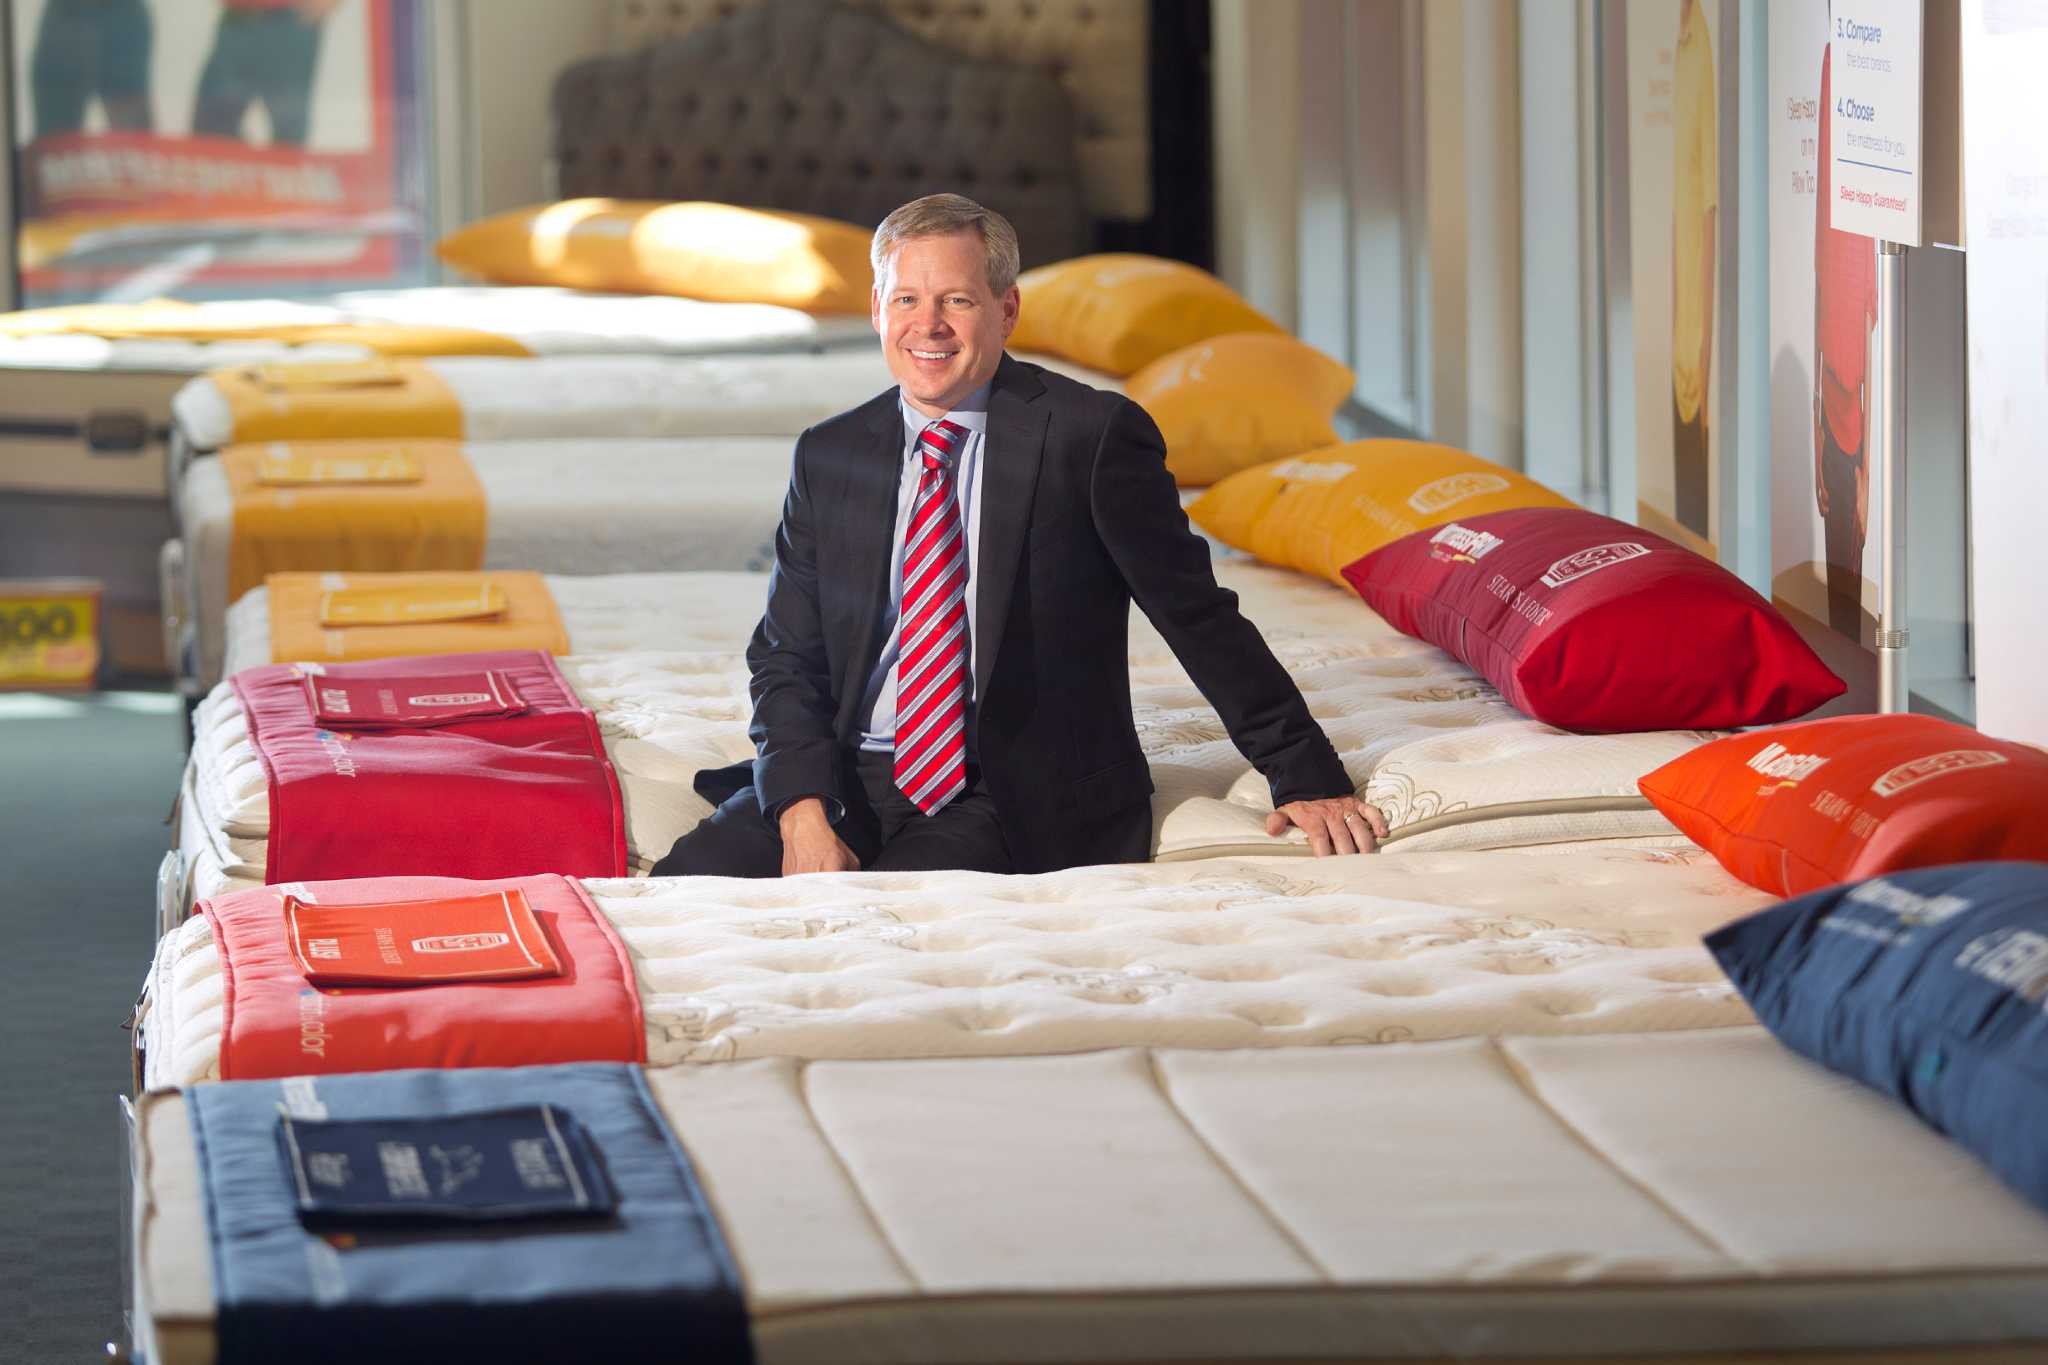 mattress firm sales manager in training job description